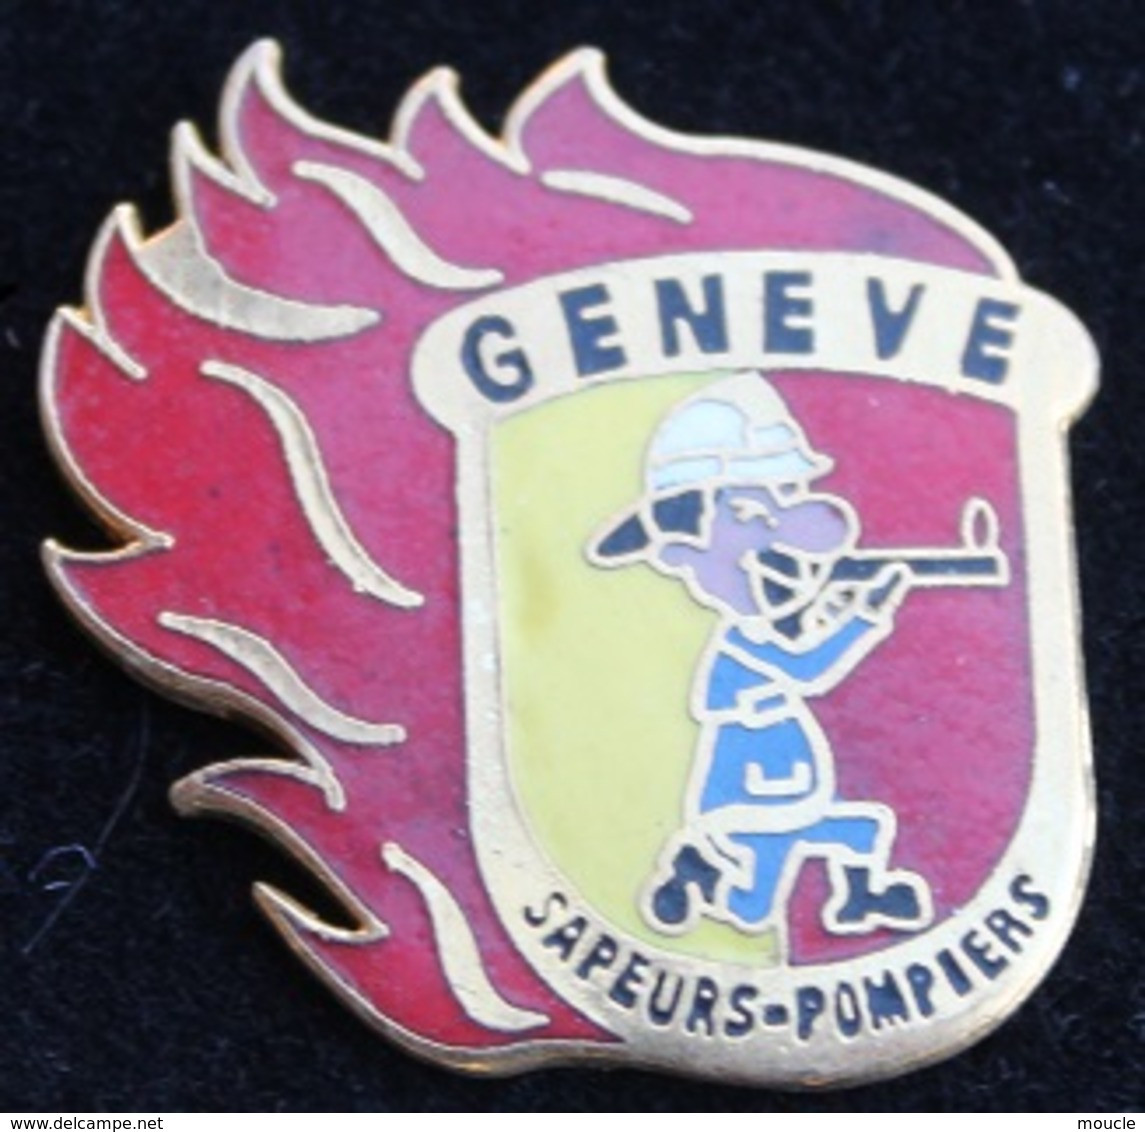 TIR -  SAPEURS POMPIERS DE LA VILLE GENEVE - SUISSE-SCHWEIZER FEUERWEHRMANN-FIREFIGHTER SWISS -   (21) - Pompiers